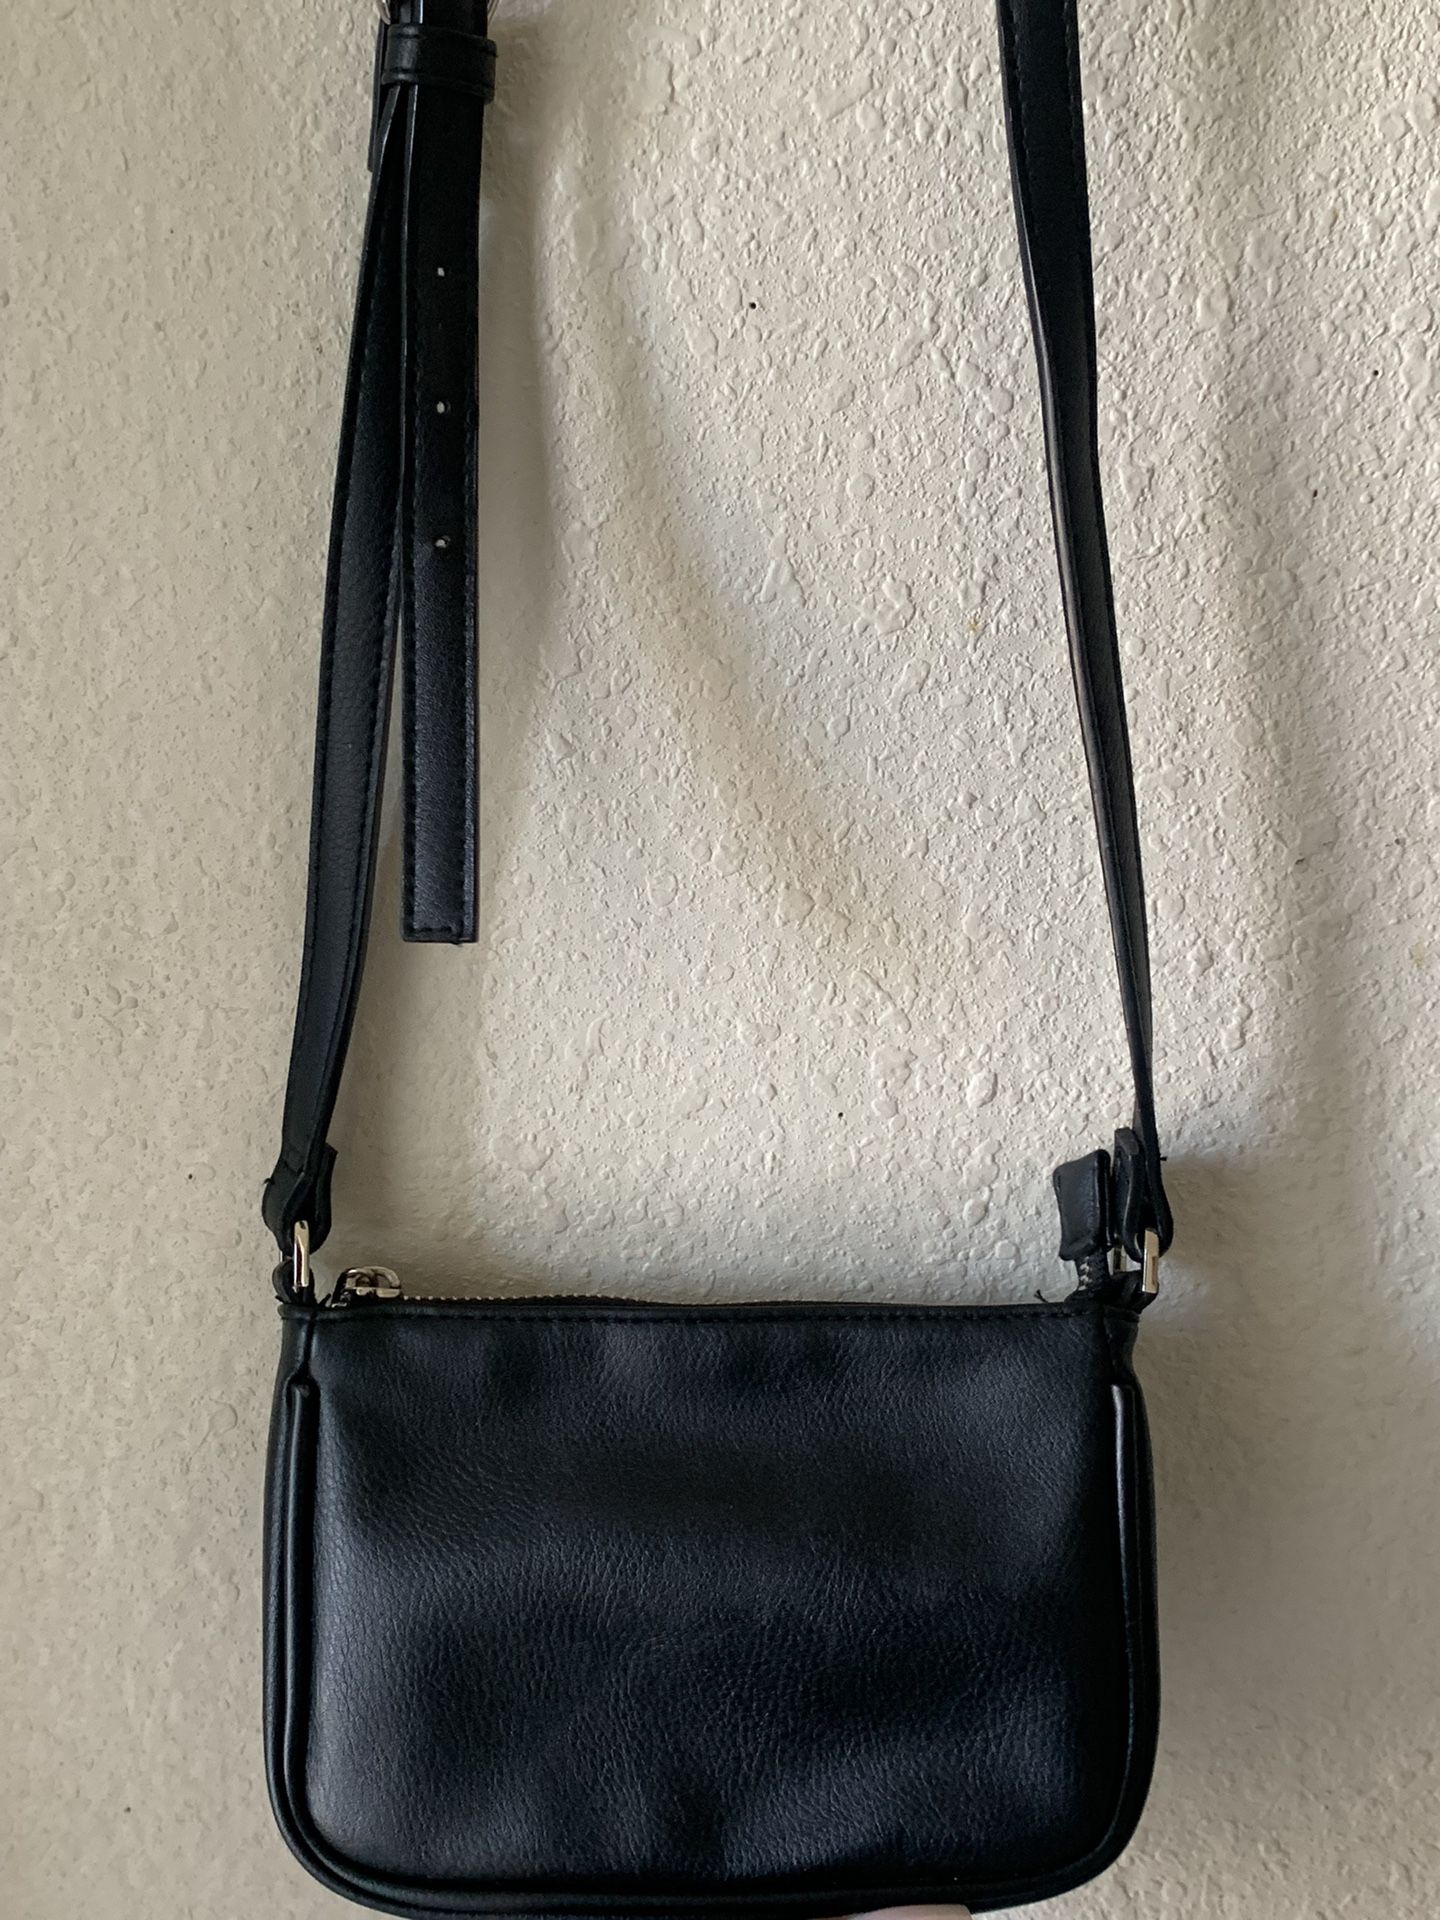 Black small shoulder bag